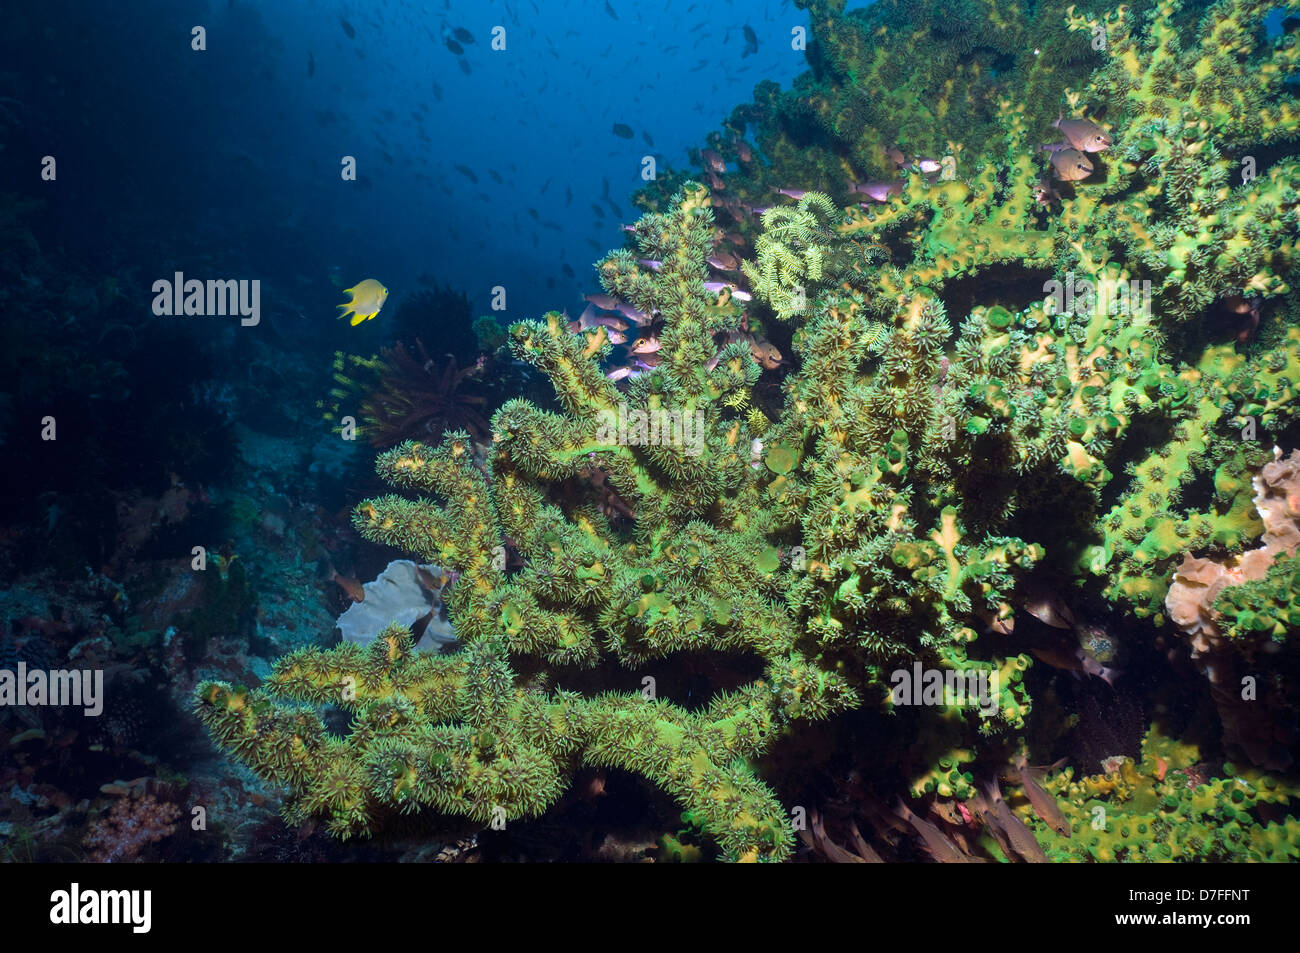 Green tubastrea coral (Tubastrea micrantha). Rinca, Komodo National Park, Indonesia Stock Photo